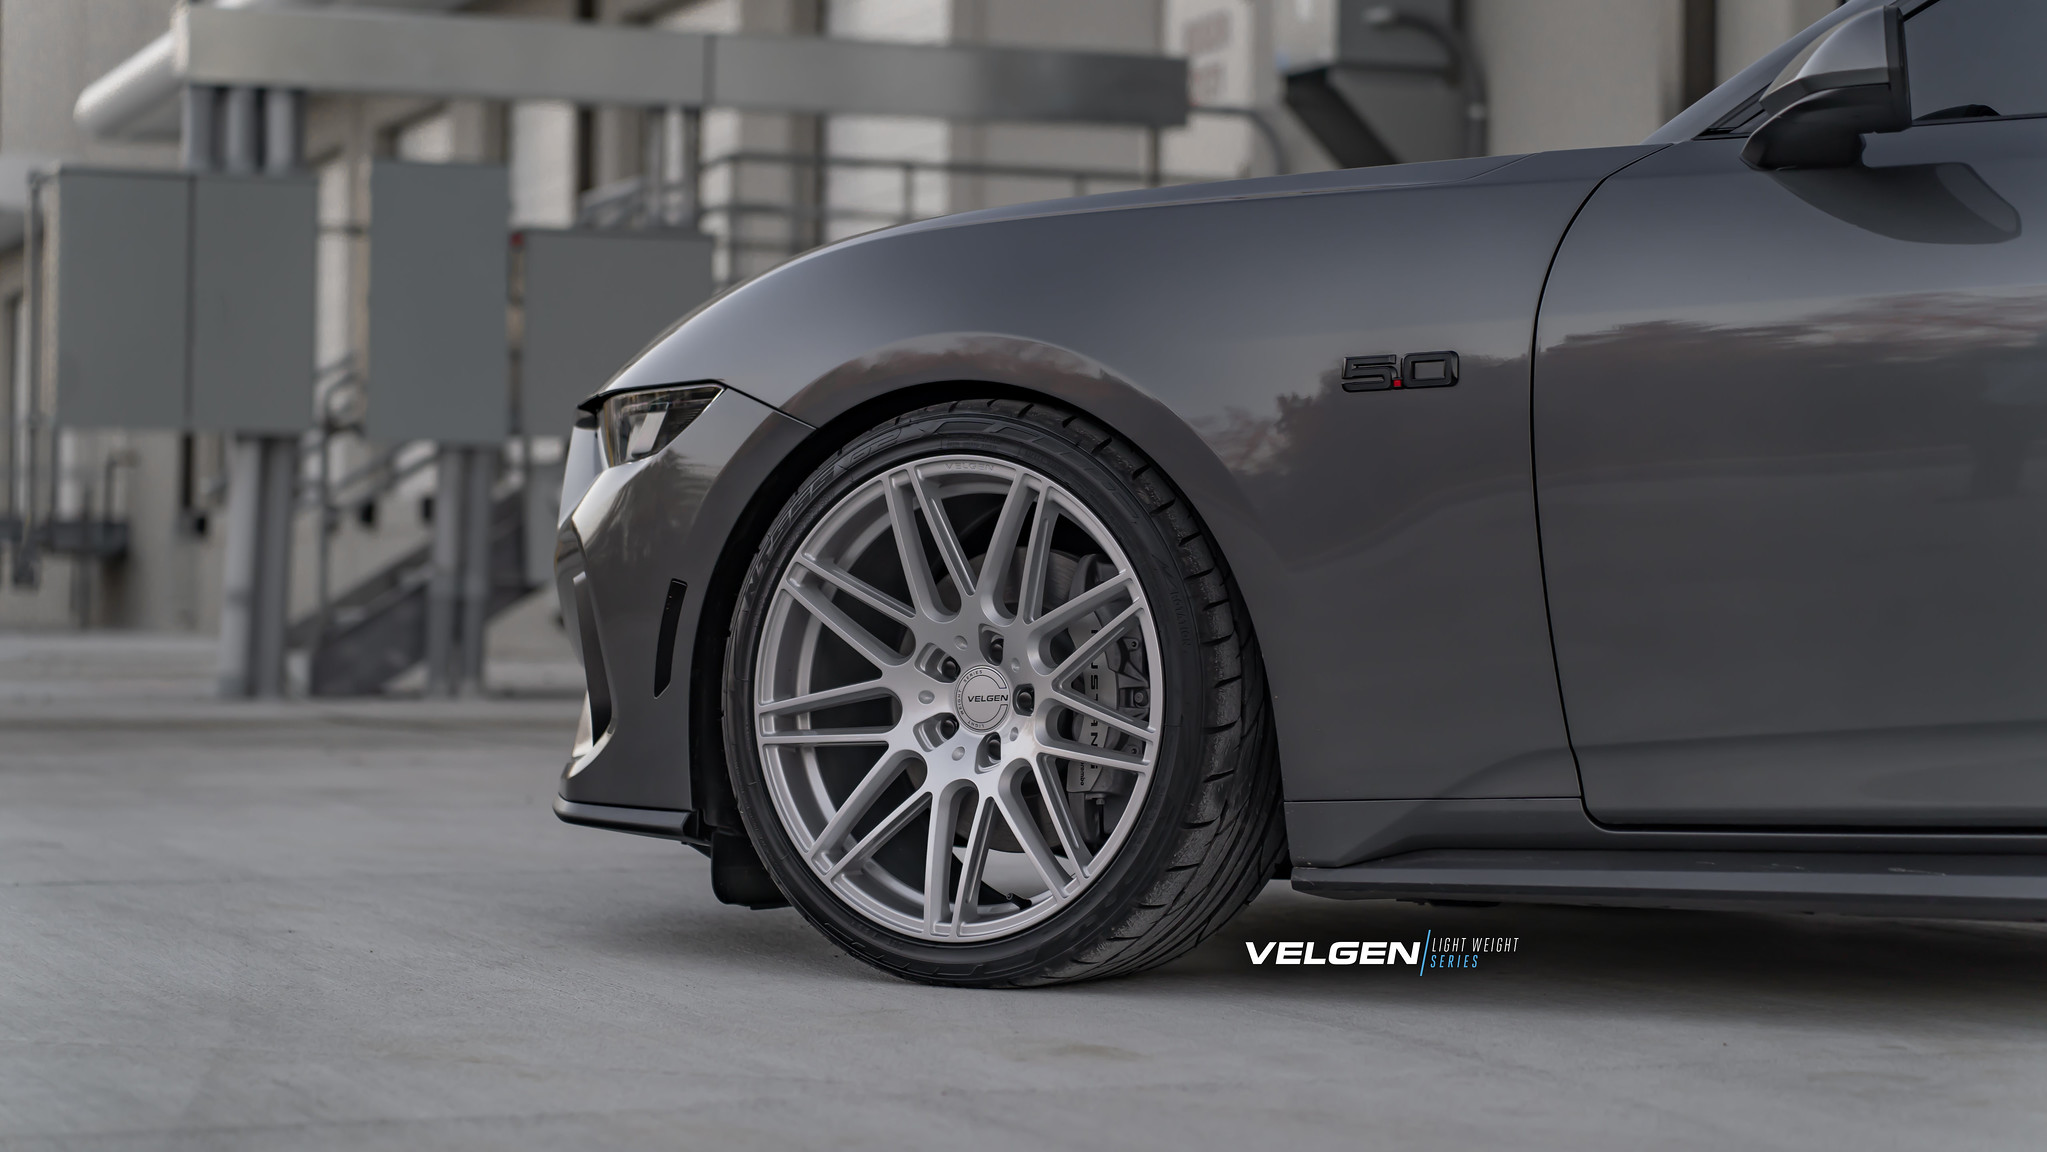 S650 Mustang Velgen wheels for your S650 Mustang | Vibe Motorsports 53529155141_7b2ab42124_k